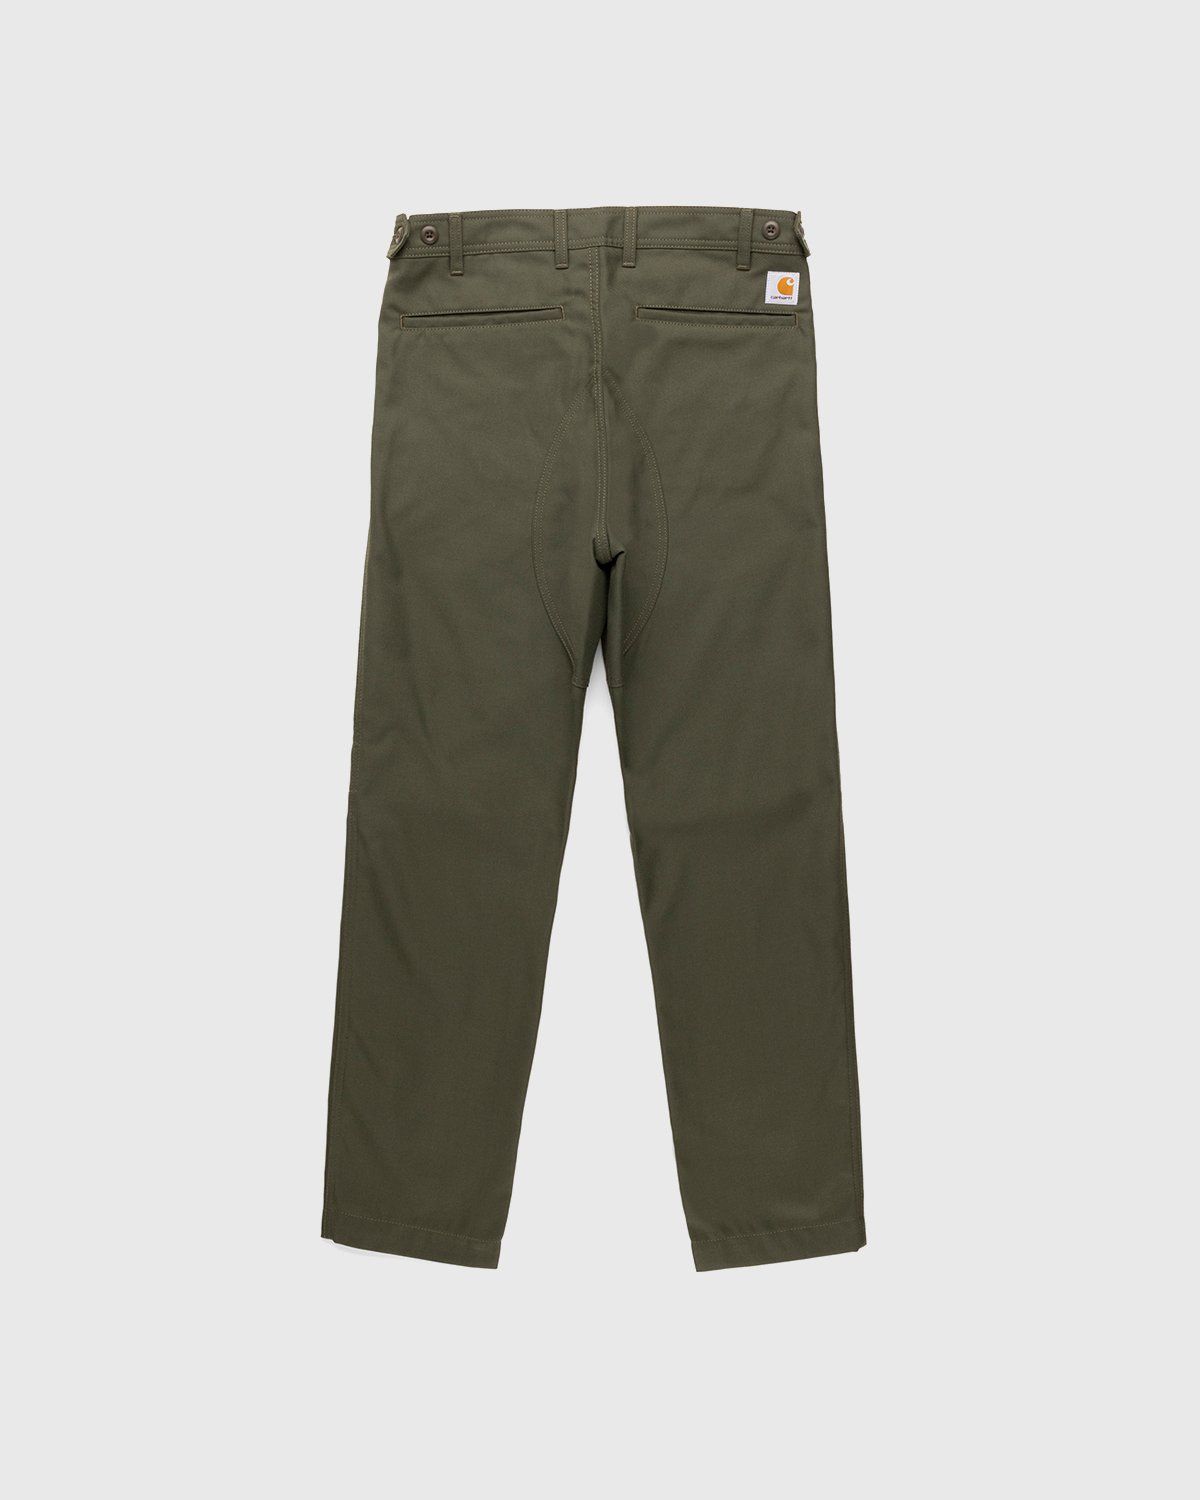 Carhartt WIP – Barton Pant Cypress - Trousers - Green - Image 2